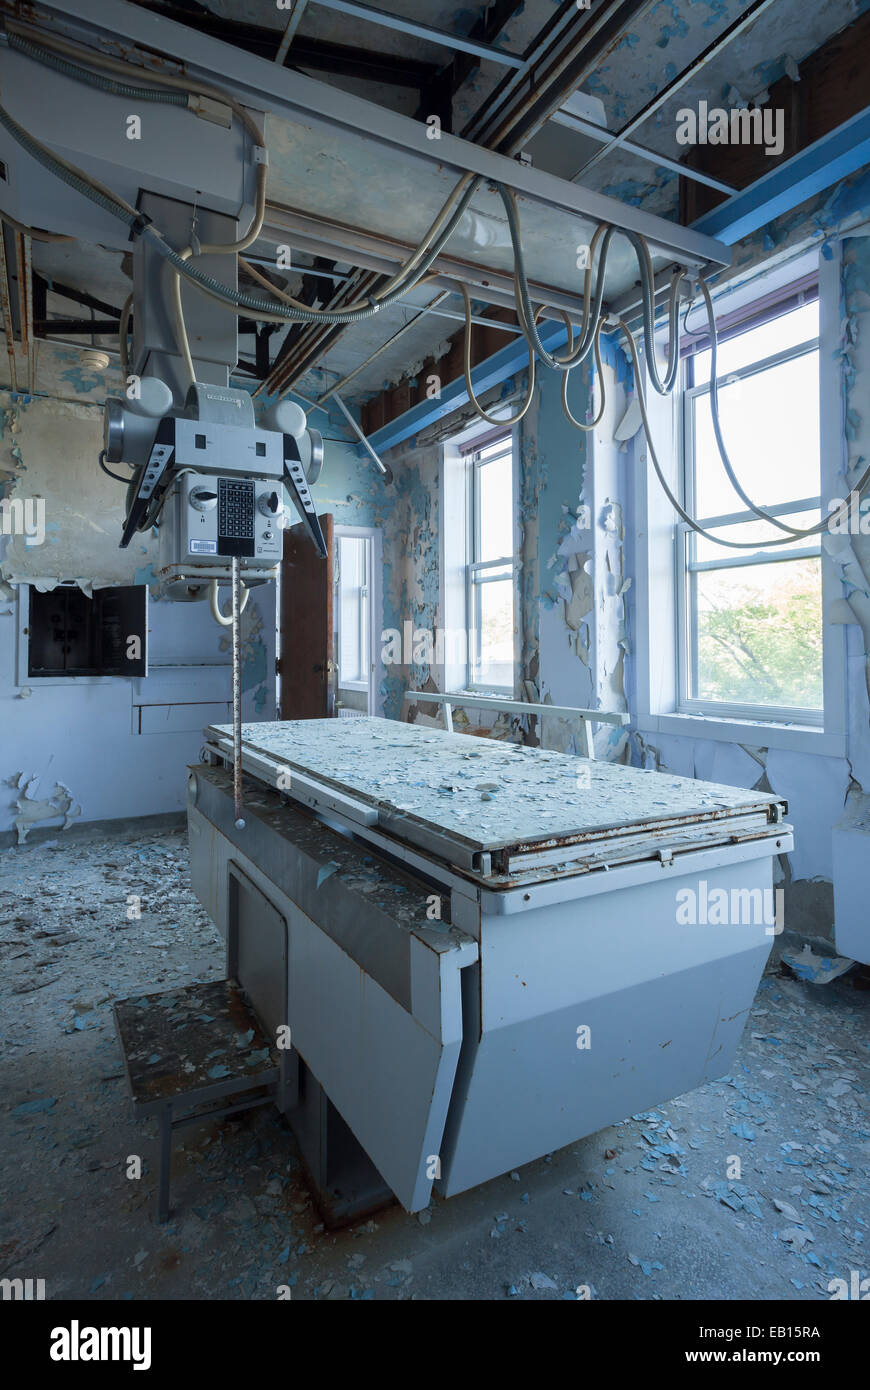 X ray generator in abandoned hospital -Fotos und -Bildmaterial in hoher  Auflösung – Alamy